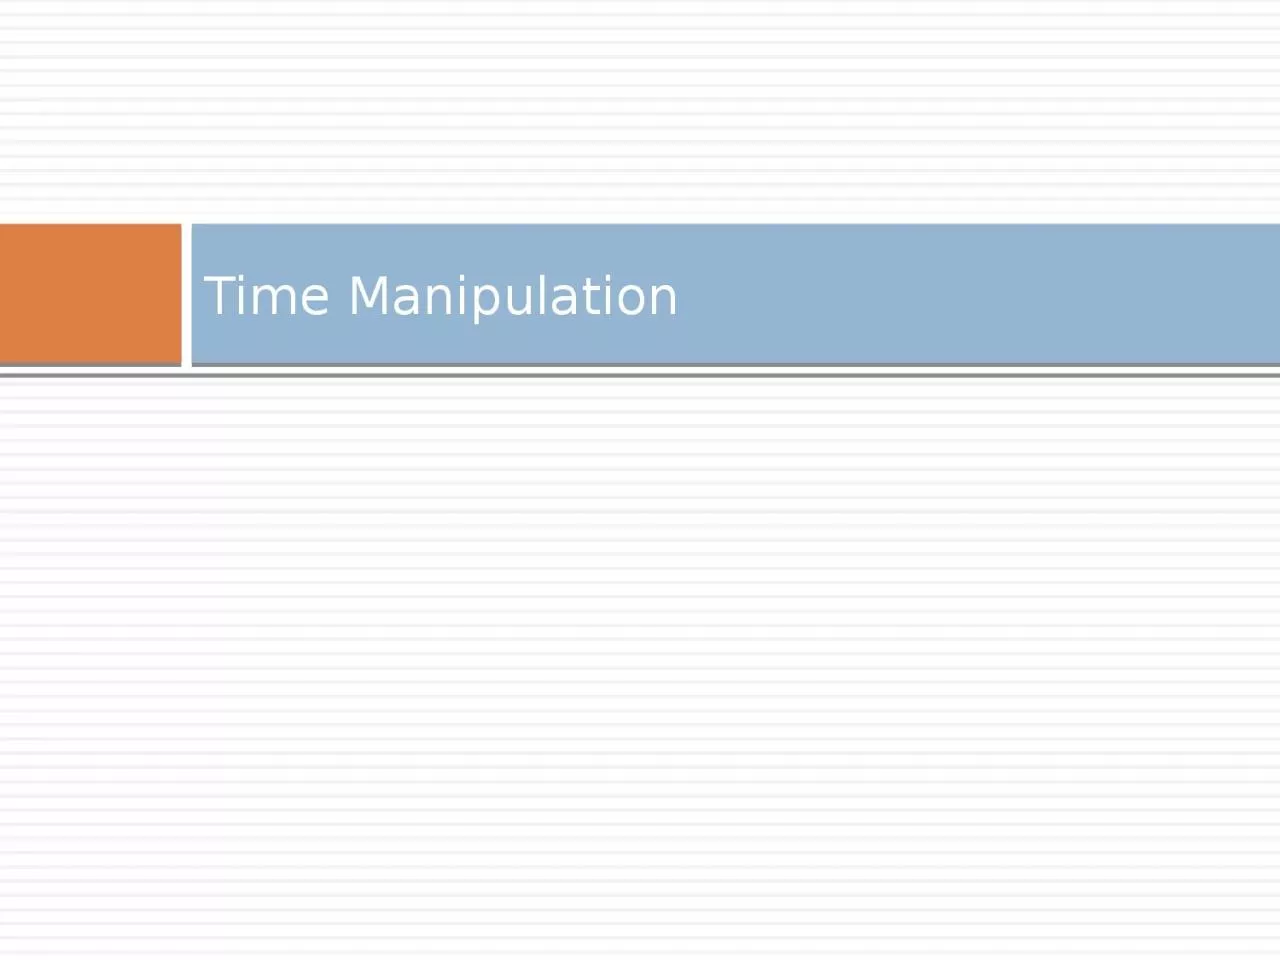 Time Manipulation Time Manipulation